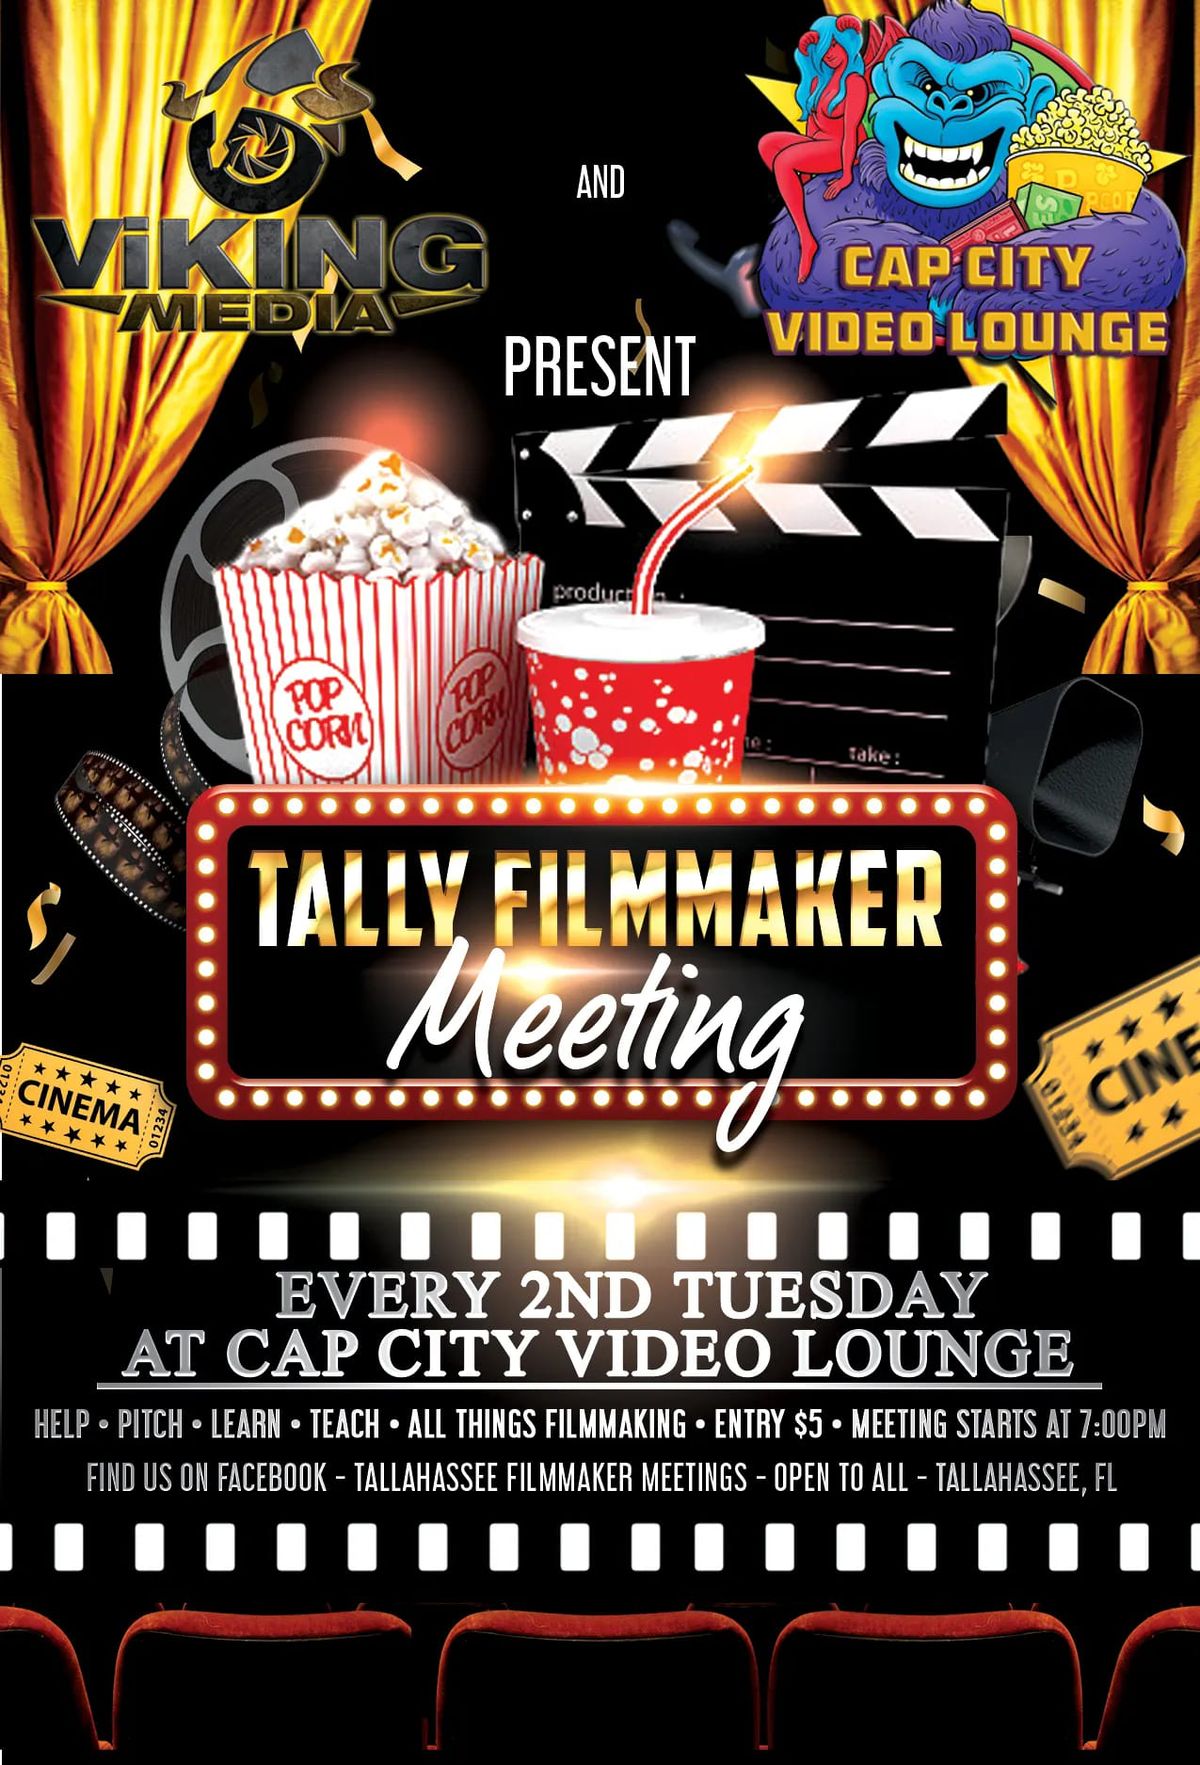 July Tallahassee Filmmaker Meeting @ CCVL